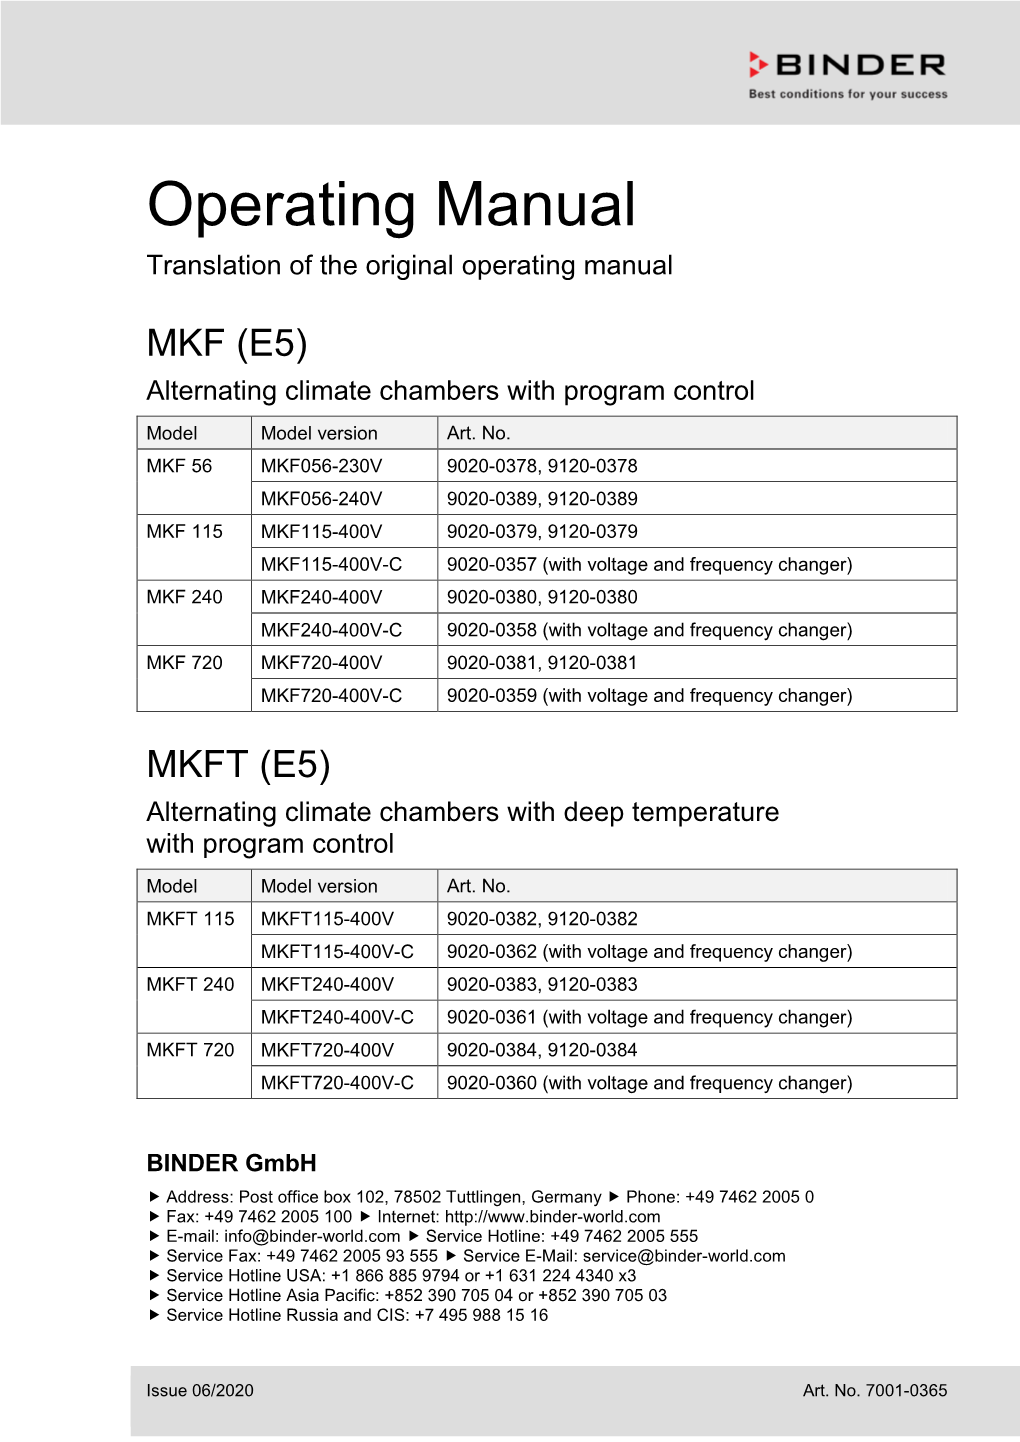 Operating Manual Translation of the Original Operating Manual